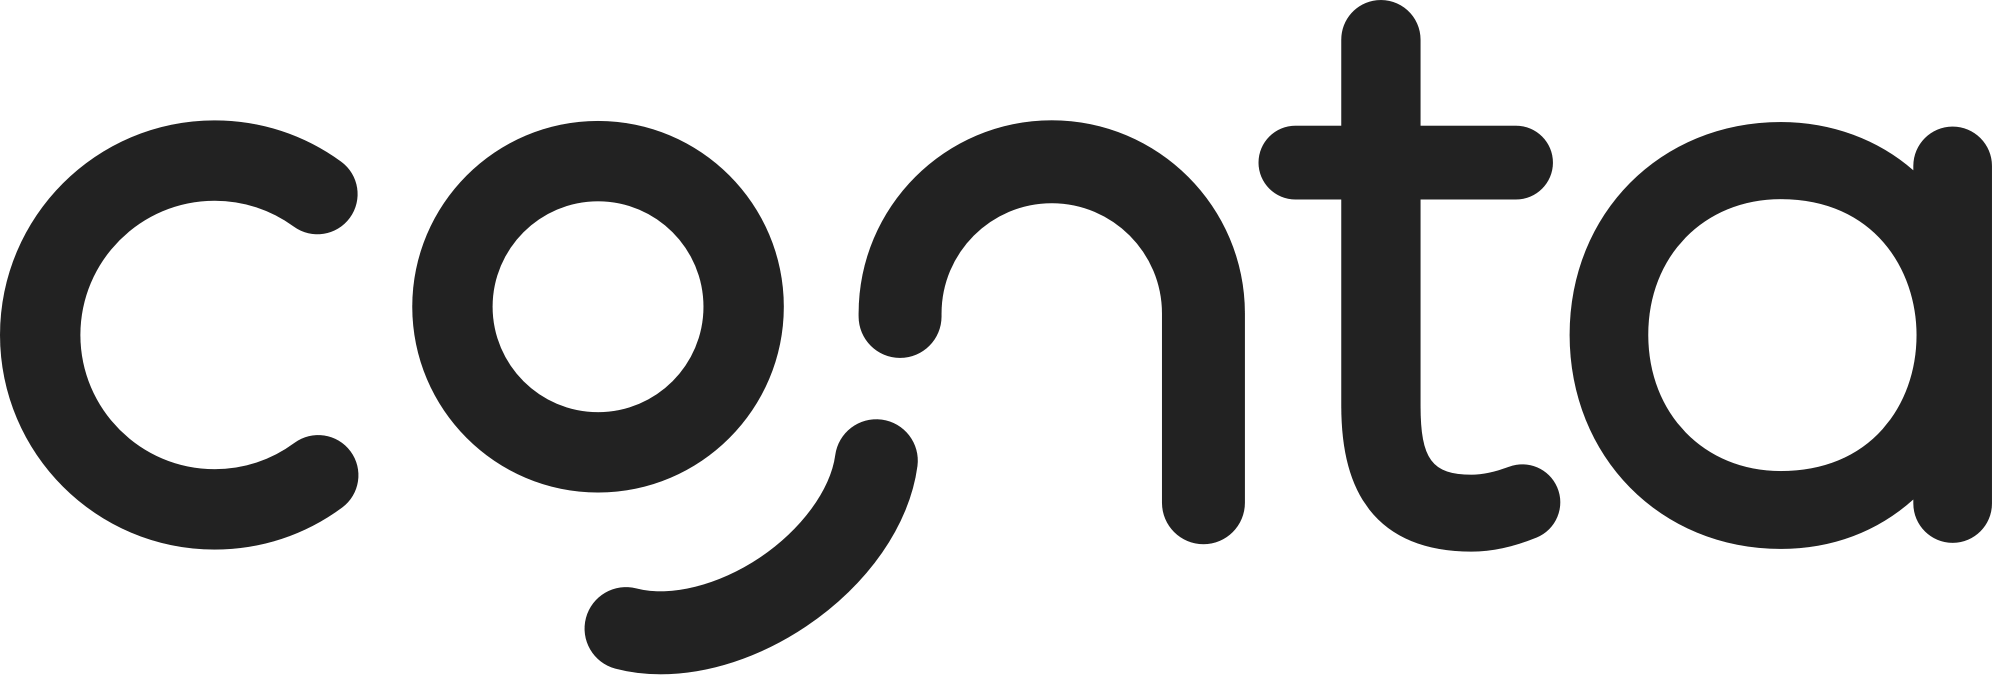 Conta regnskapsprogram logo